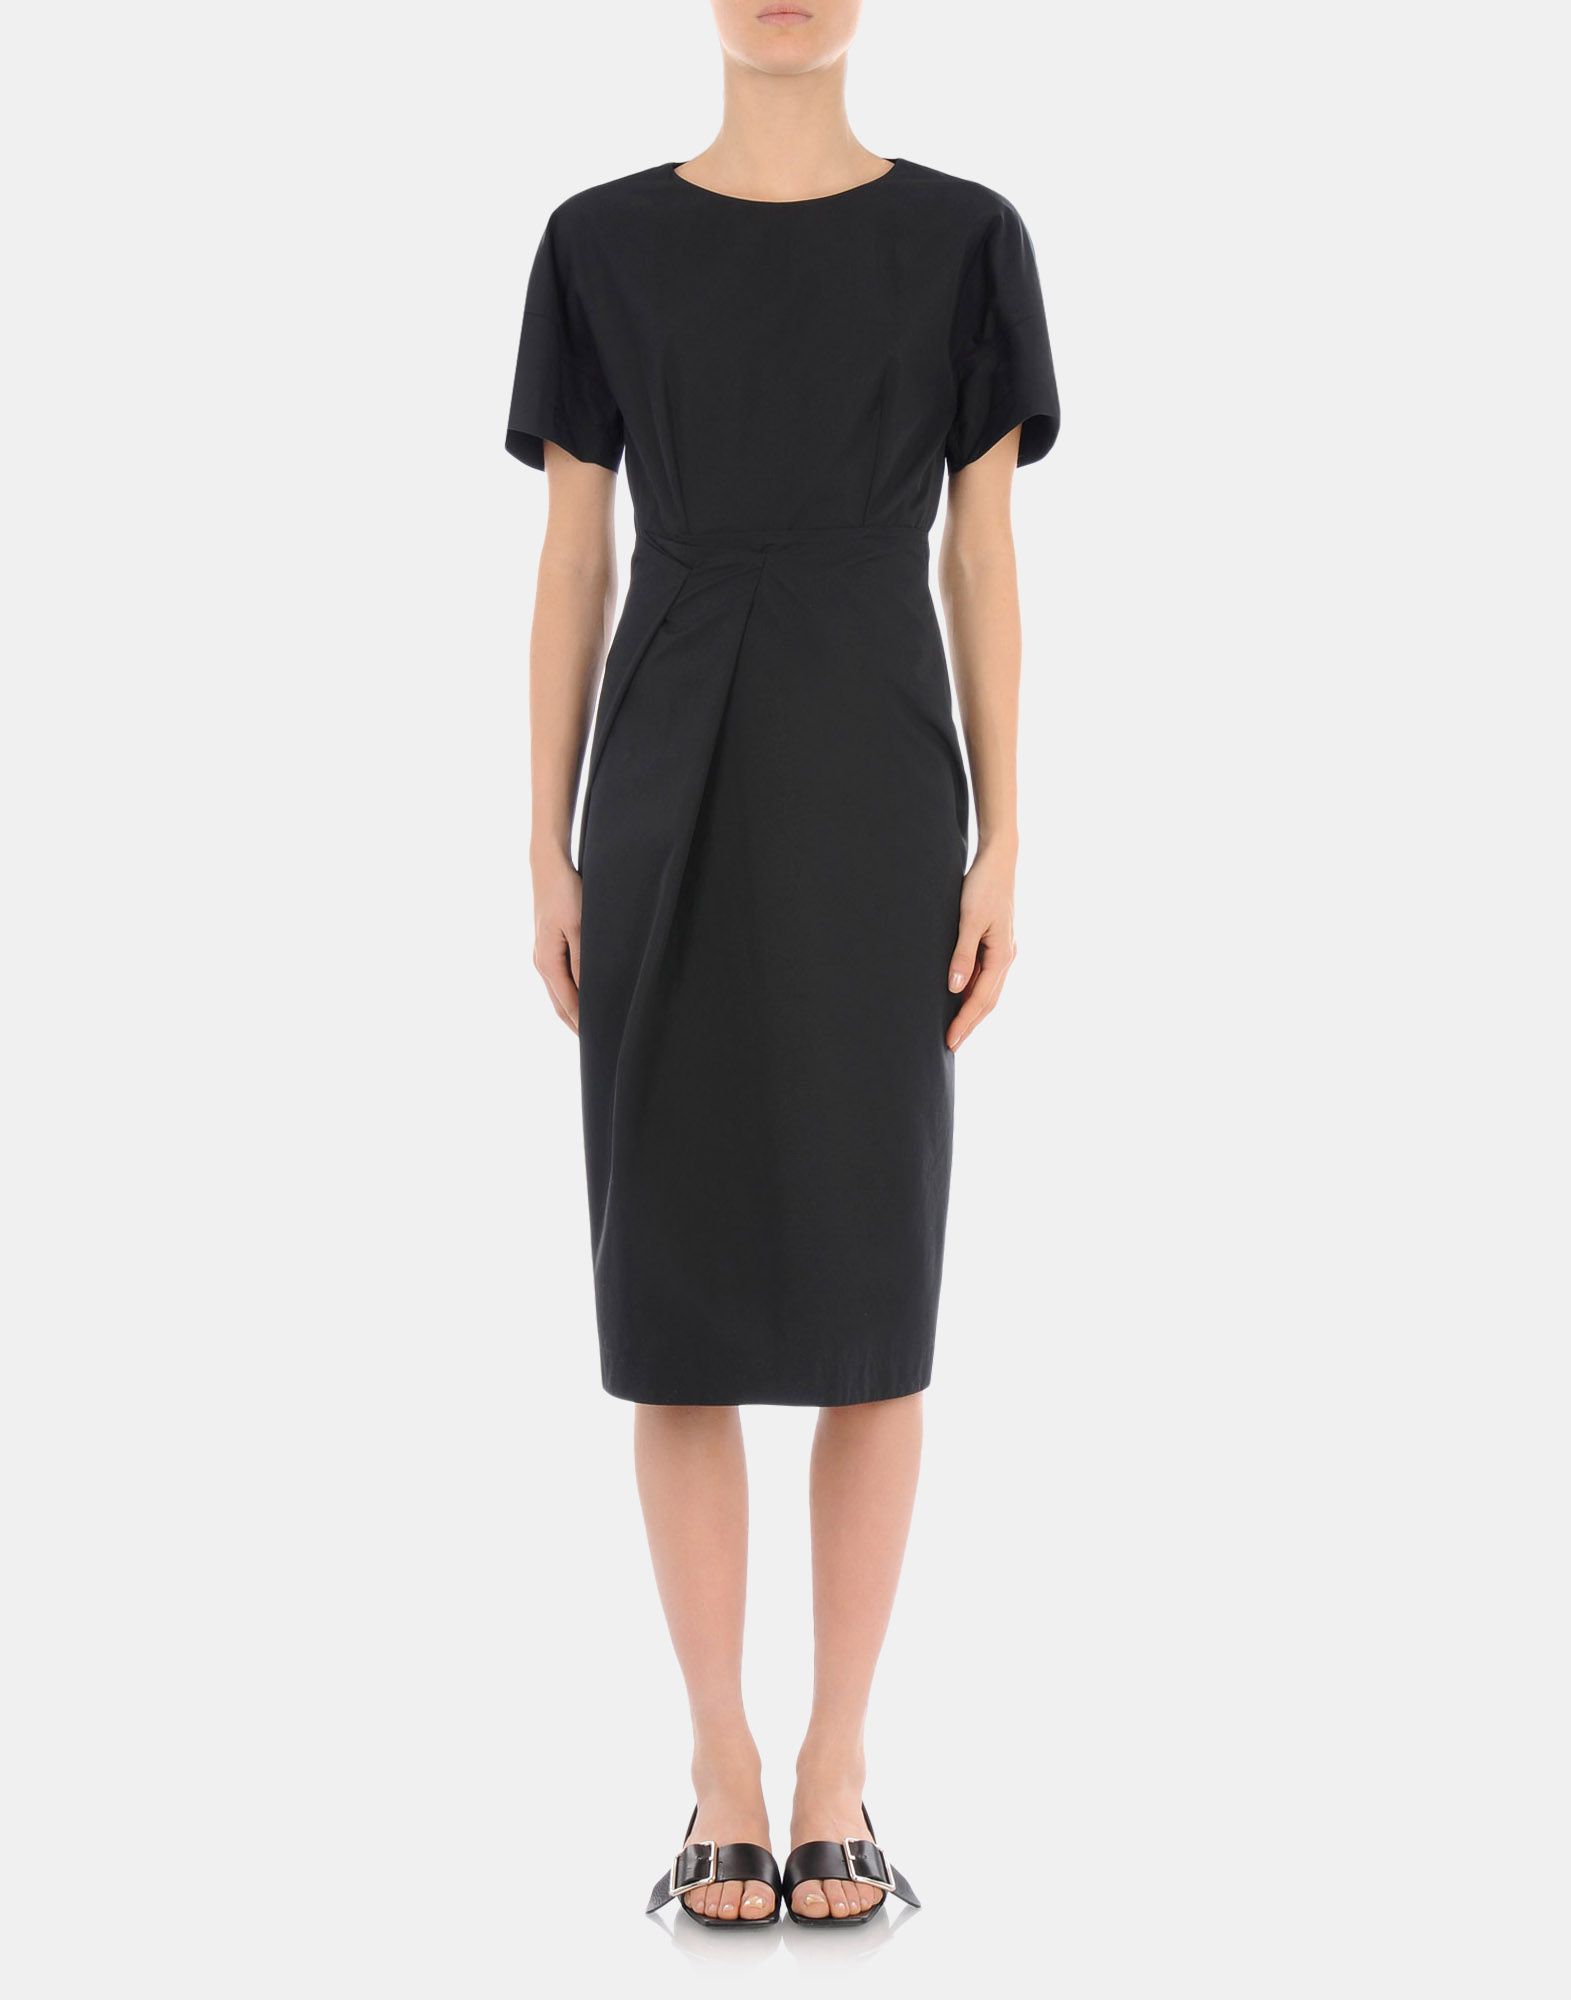 3/4 length dress Women - Dresses Women on Jil Sander Online Store